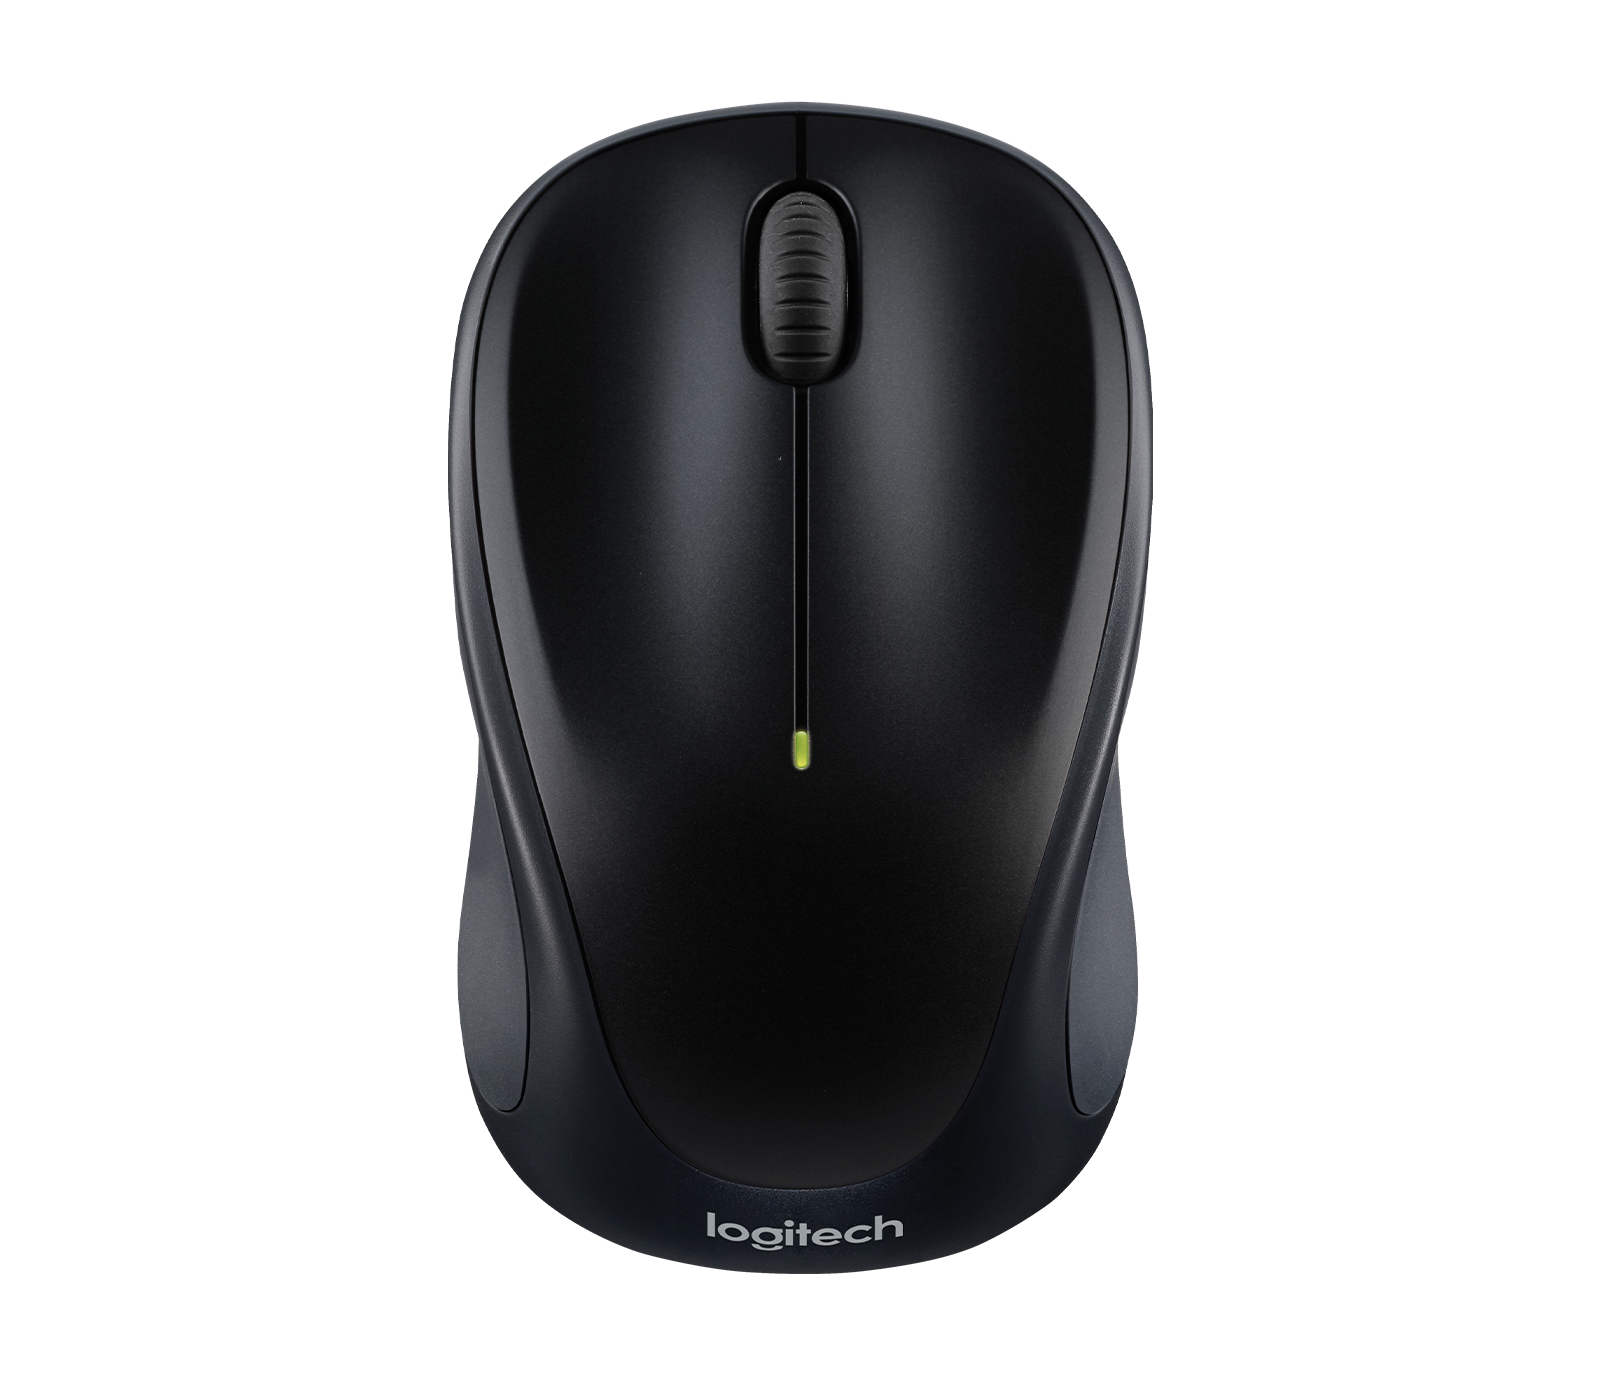 Logitech M317 Mouse with Compact Contoured Design